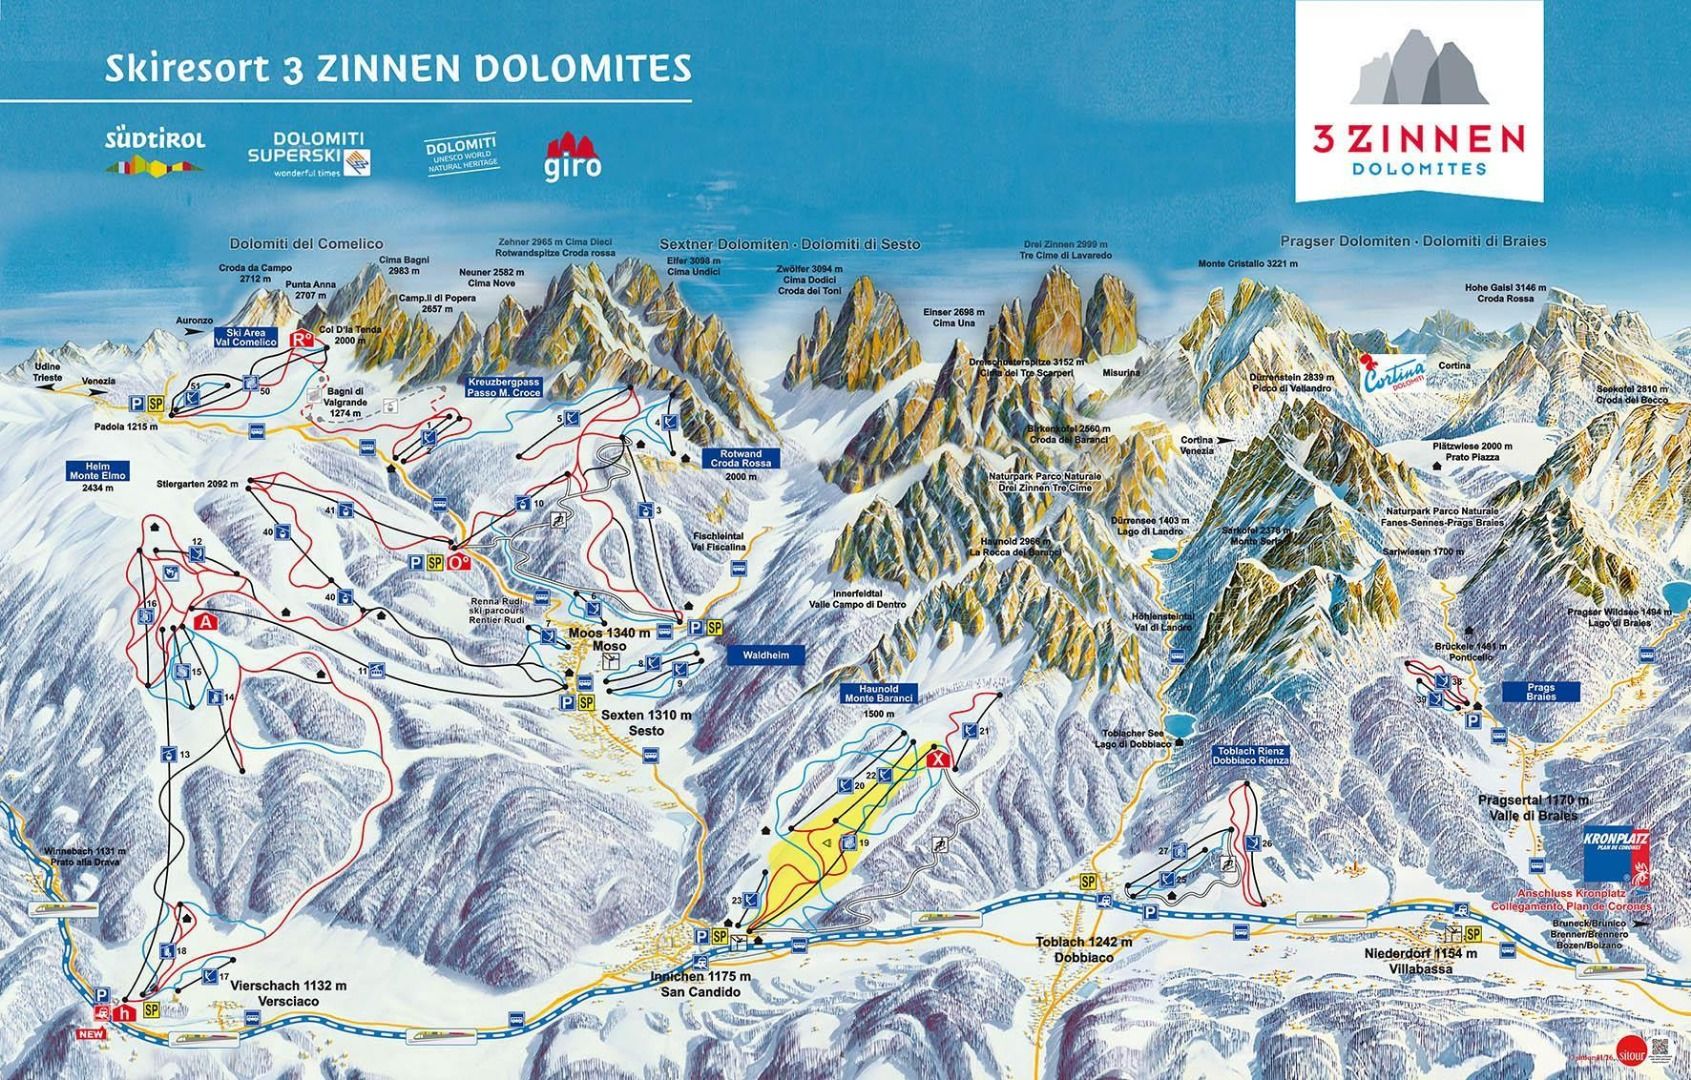 The 3 Zinnen Dolomites ski zone